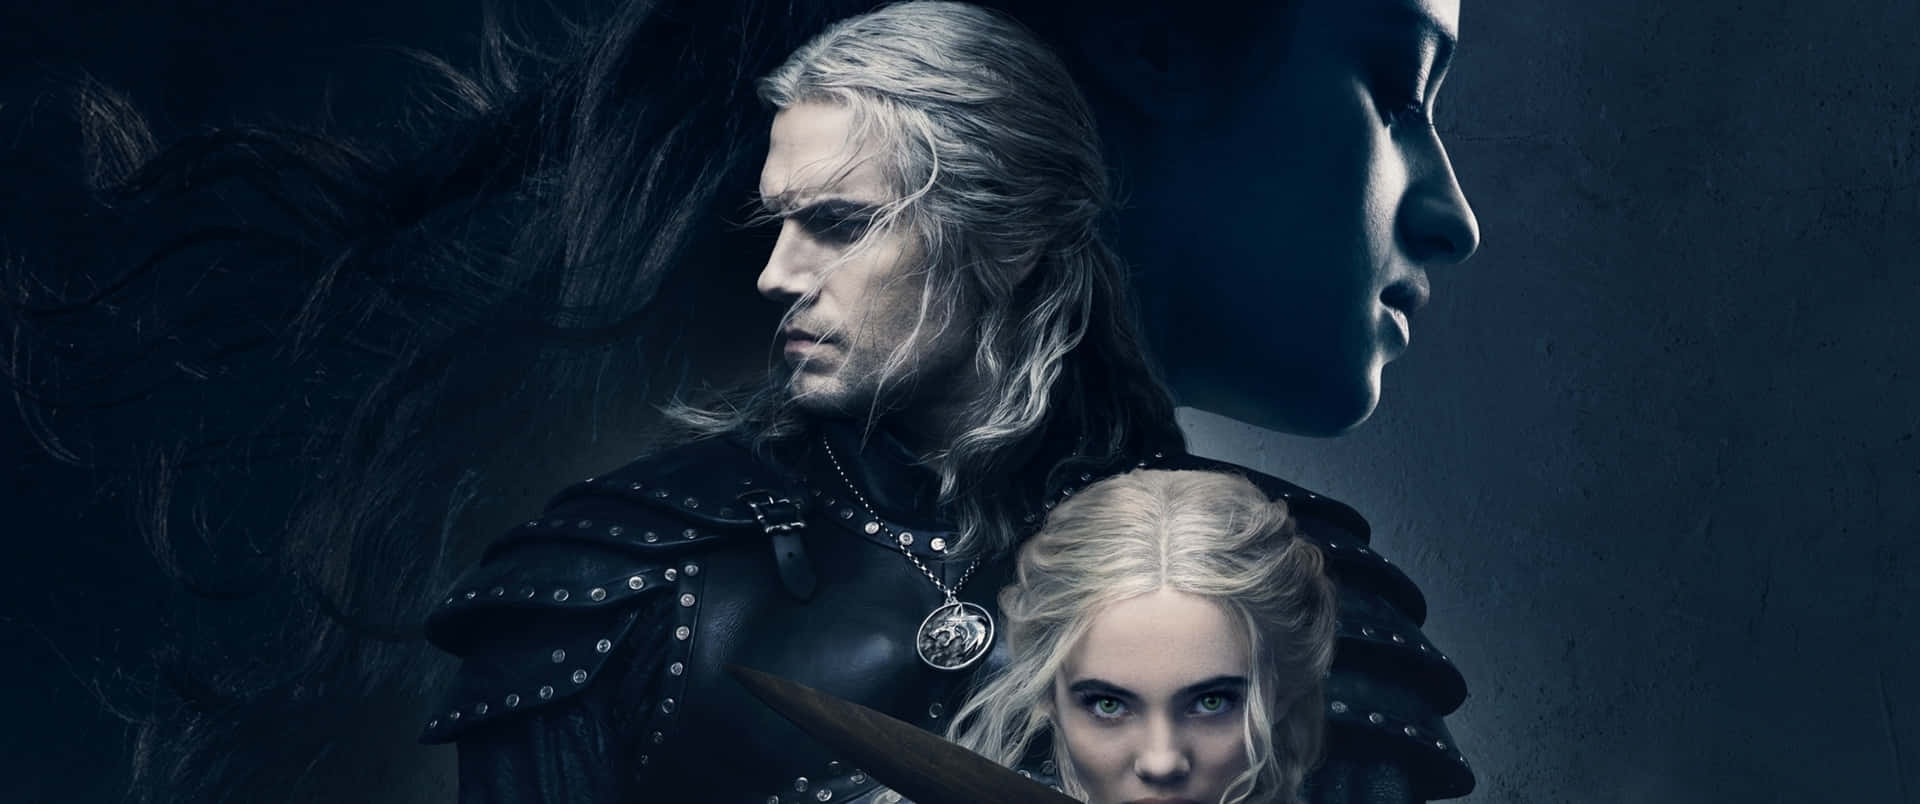 Geraltav Rivia I The Witcher. Wallpaper